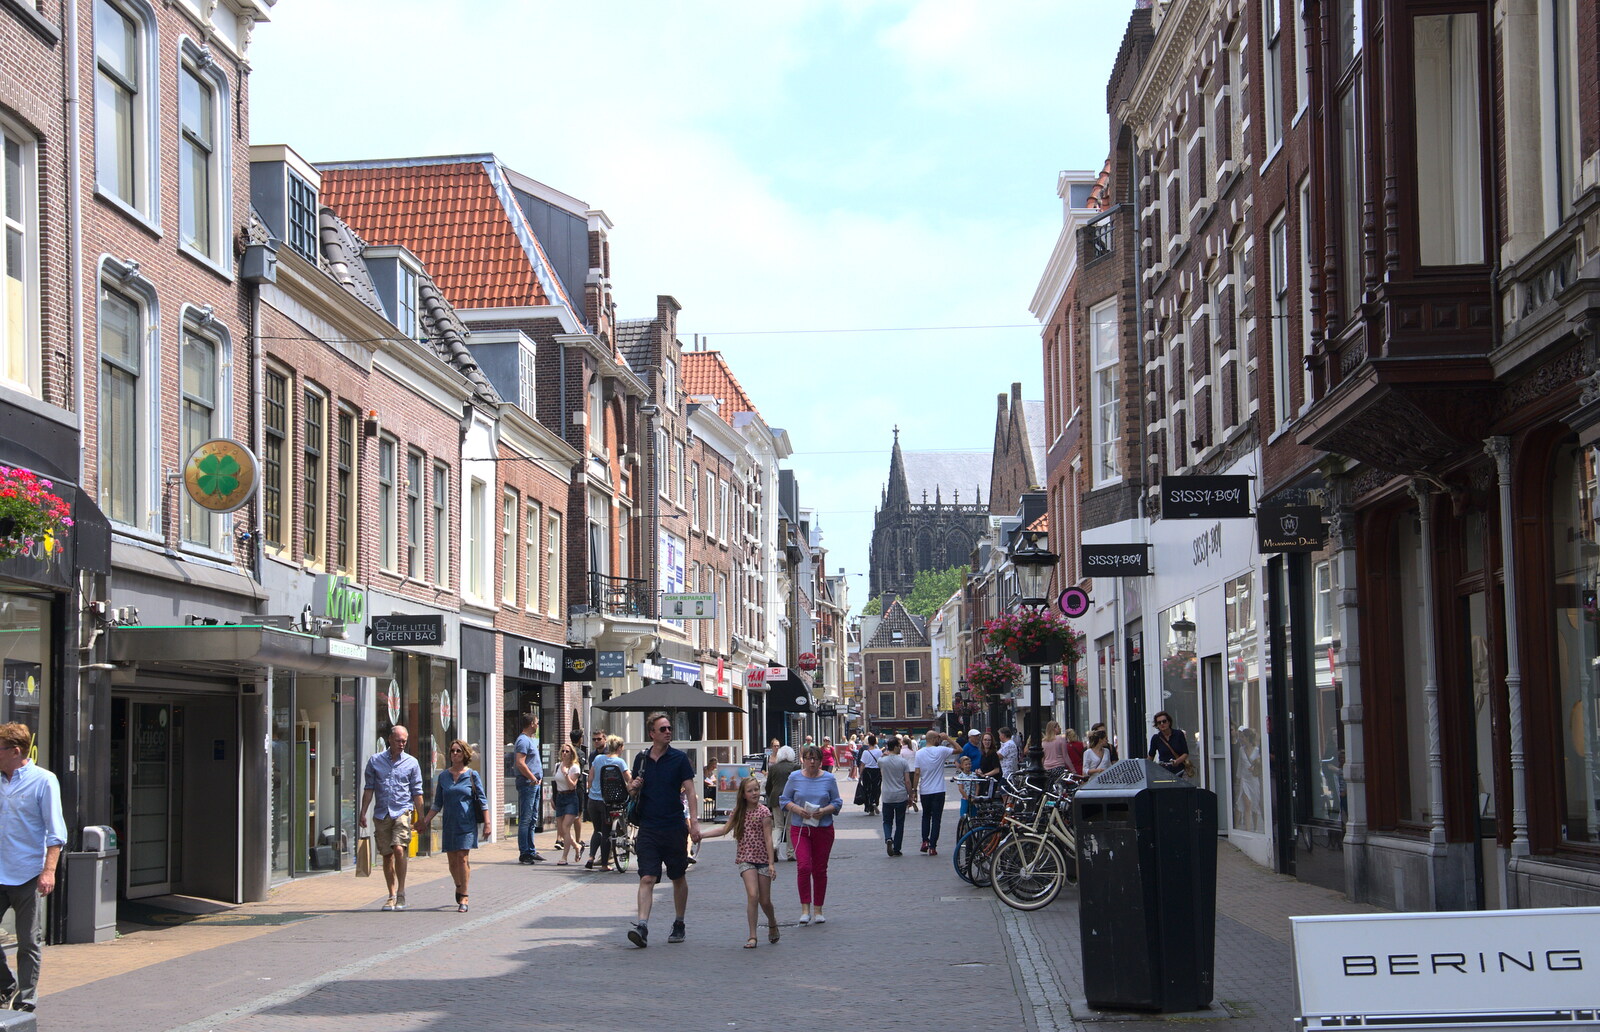 The streets of Utrecht - Steenweg, possibly from A Postcard from Utrecht, Nederlands - 10th June 2018